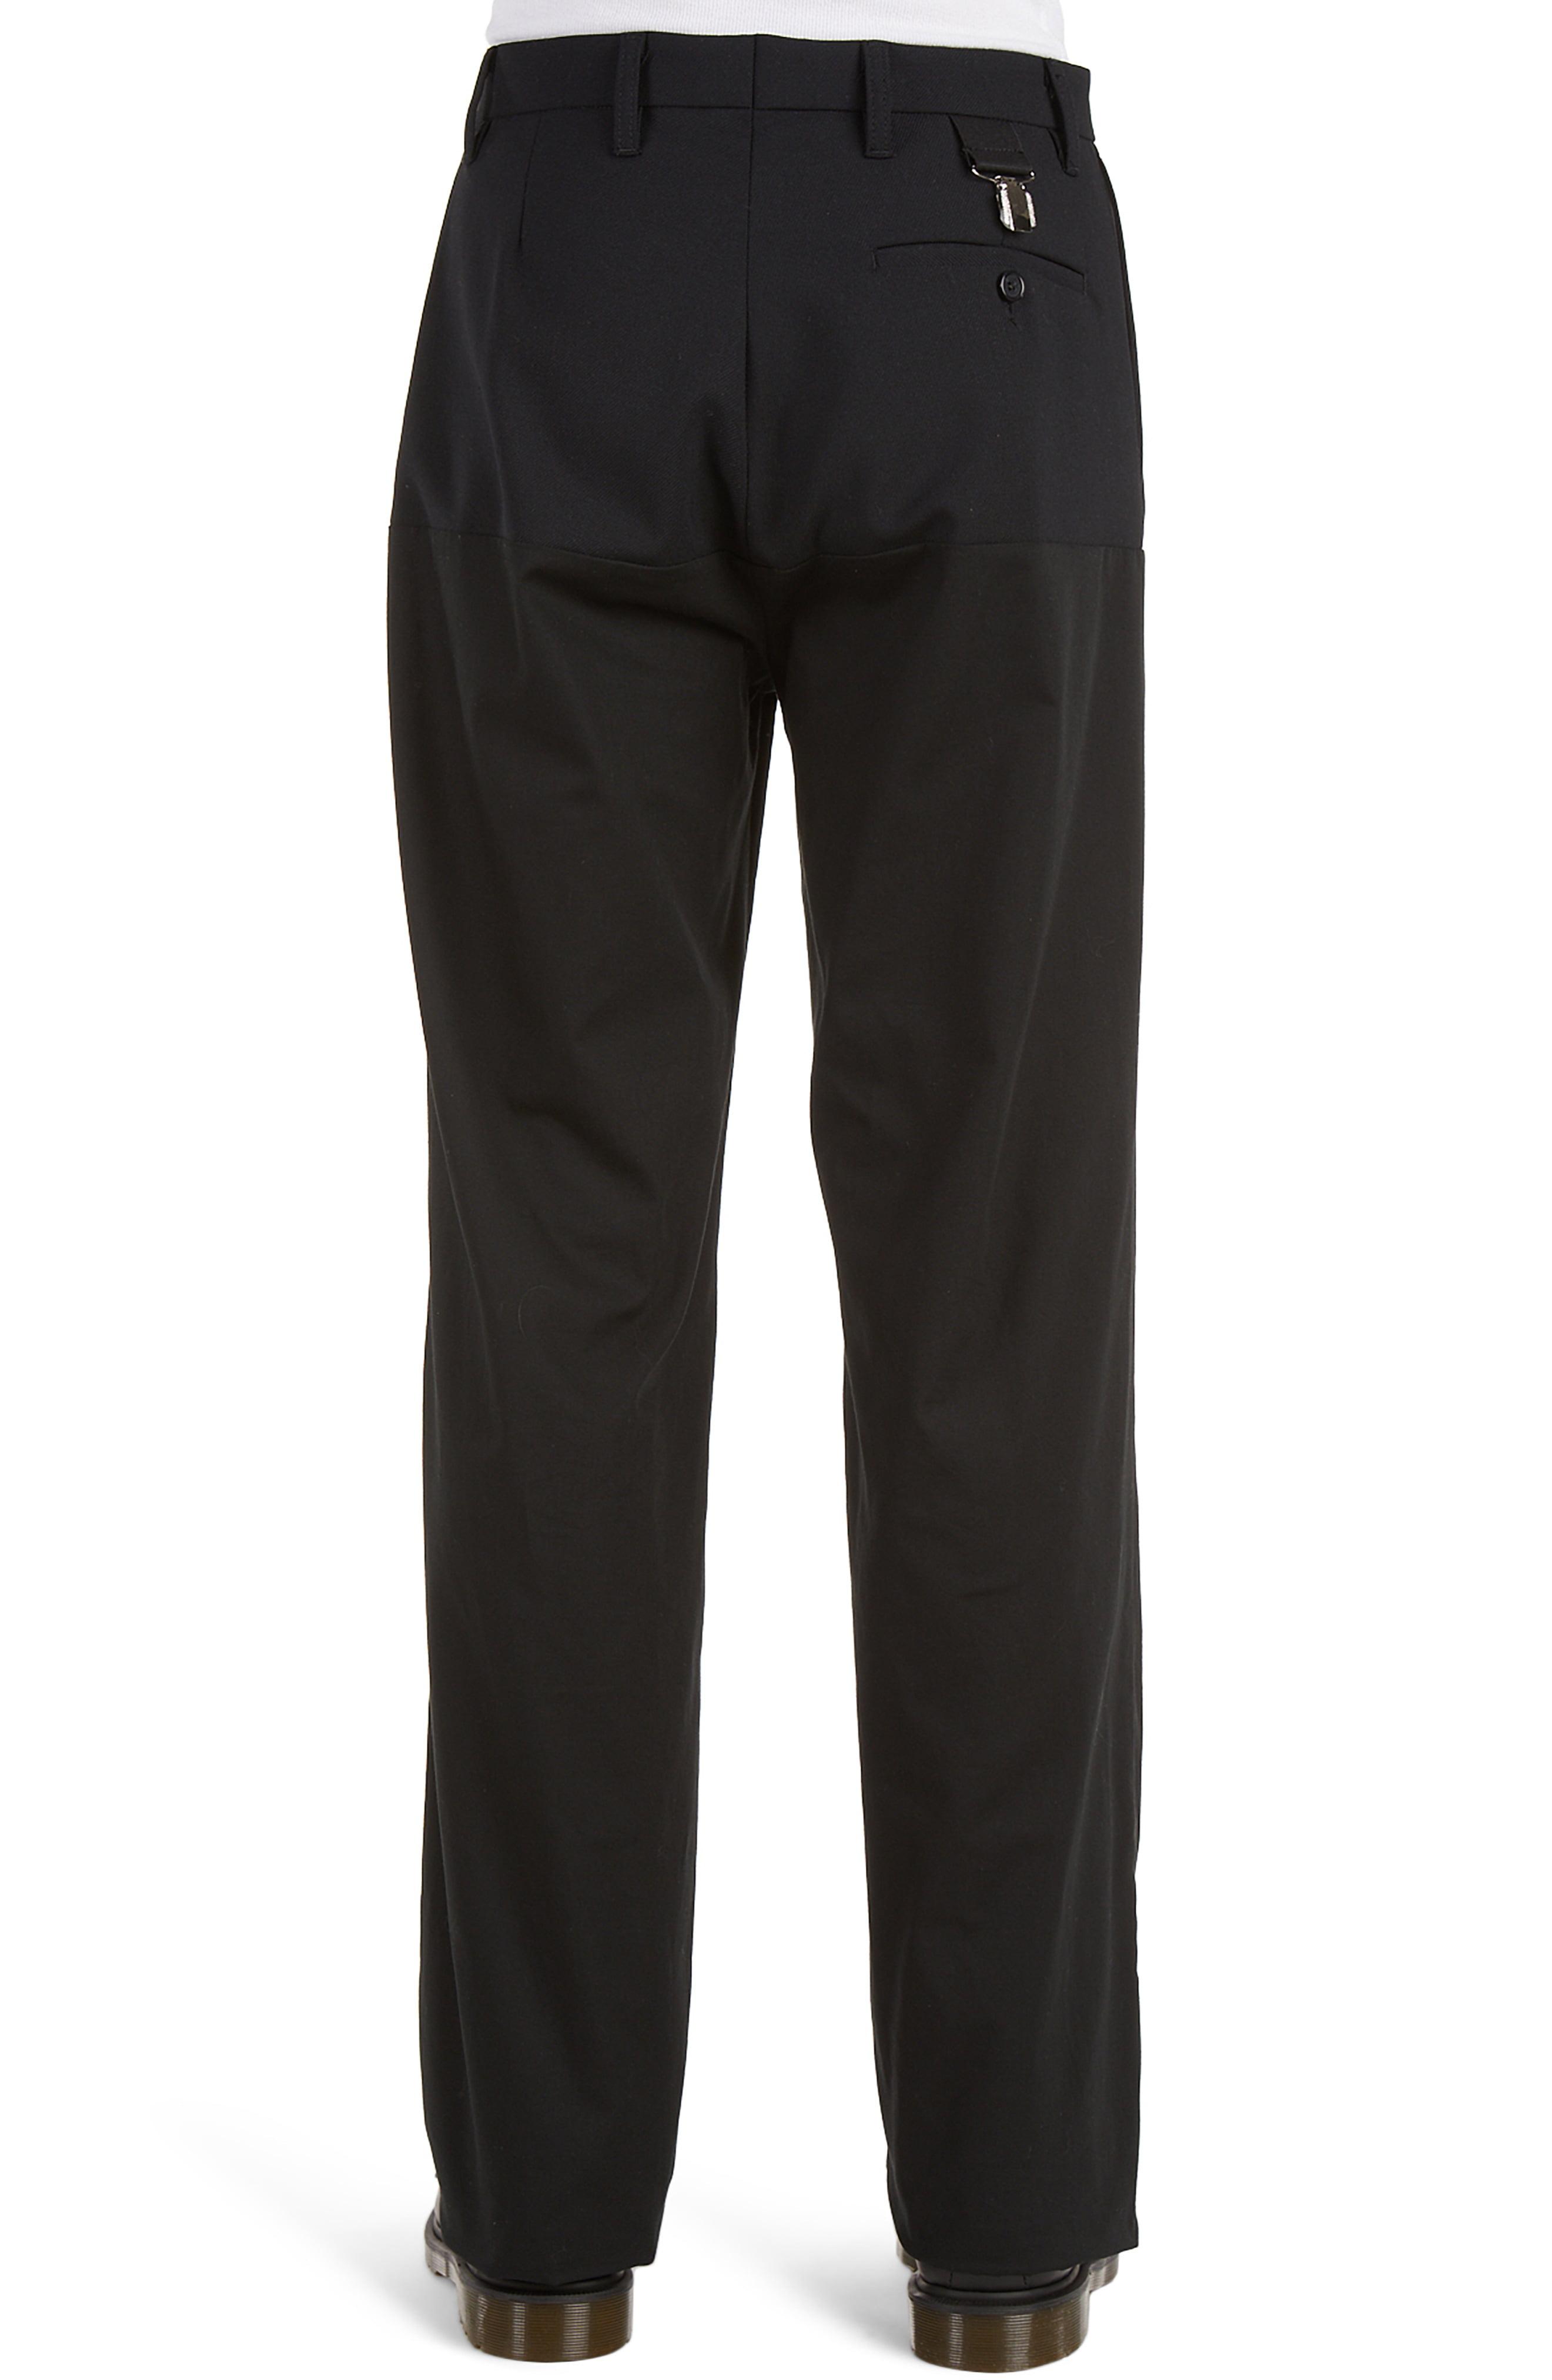 Raf Simons Horizontal Panel Wool Blend Pants in Black for Men - Lyst